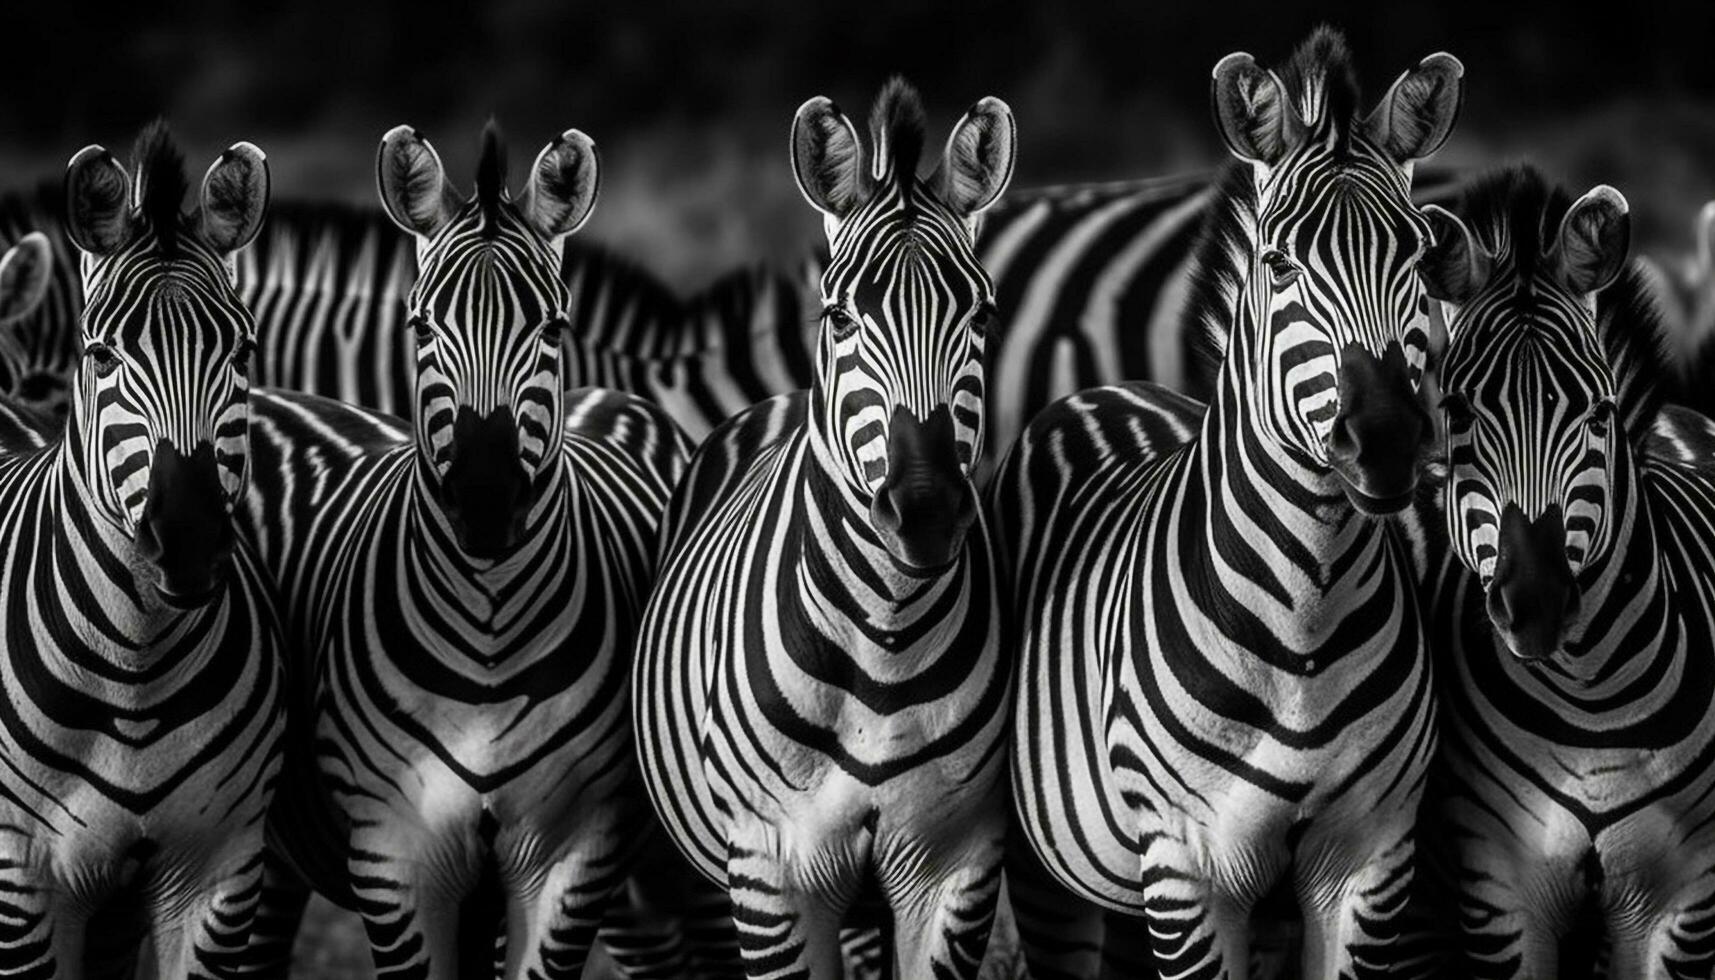 Striped zebra herd in monochrome savannah beauty generated by AI photo